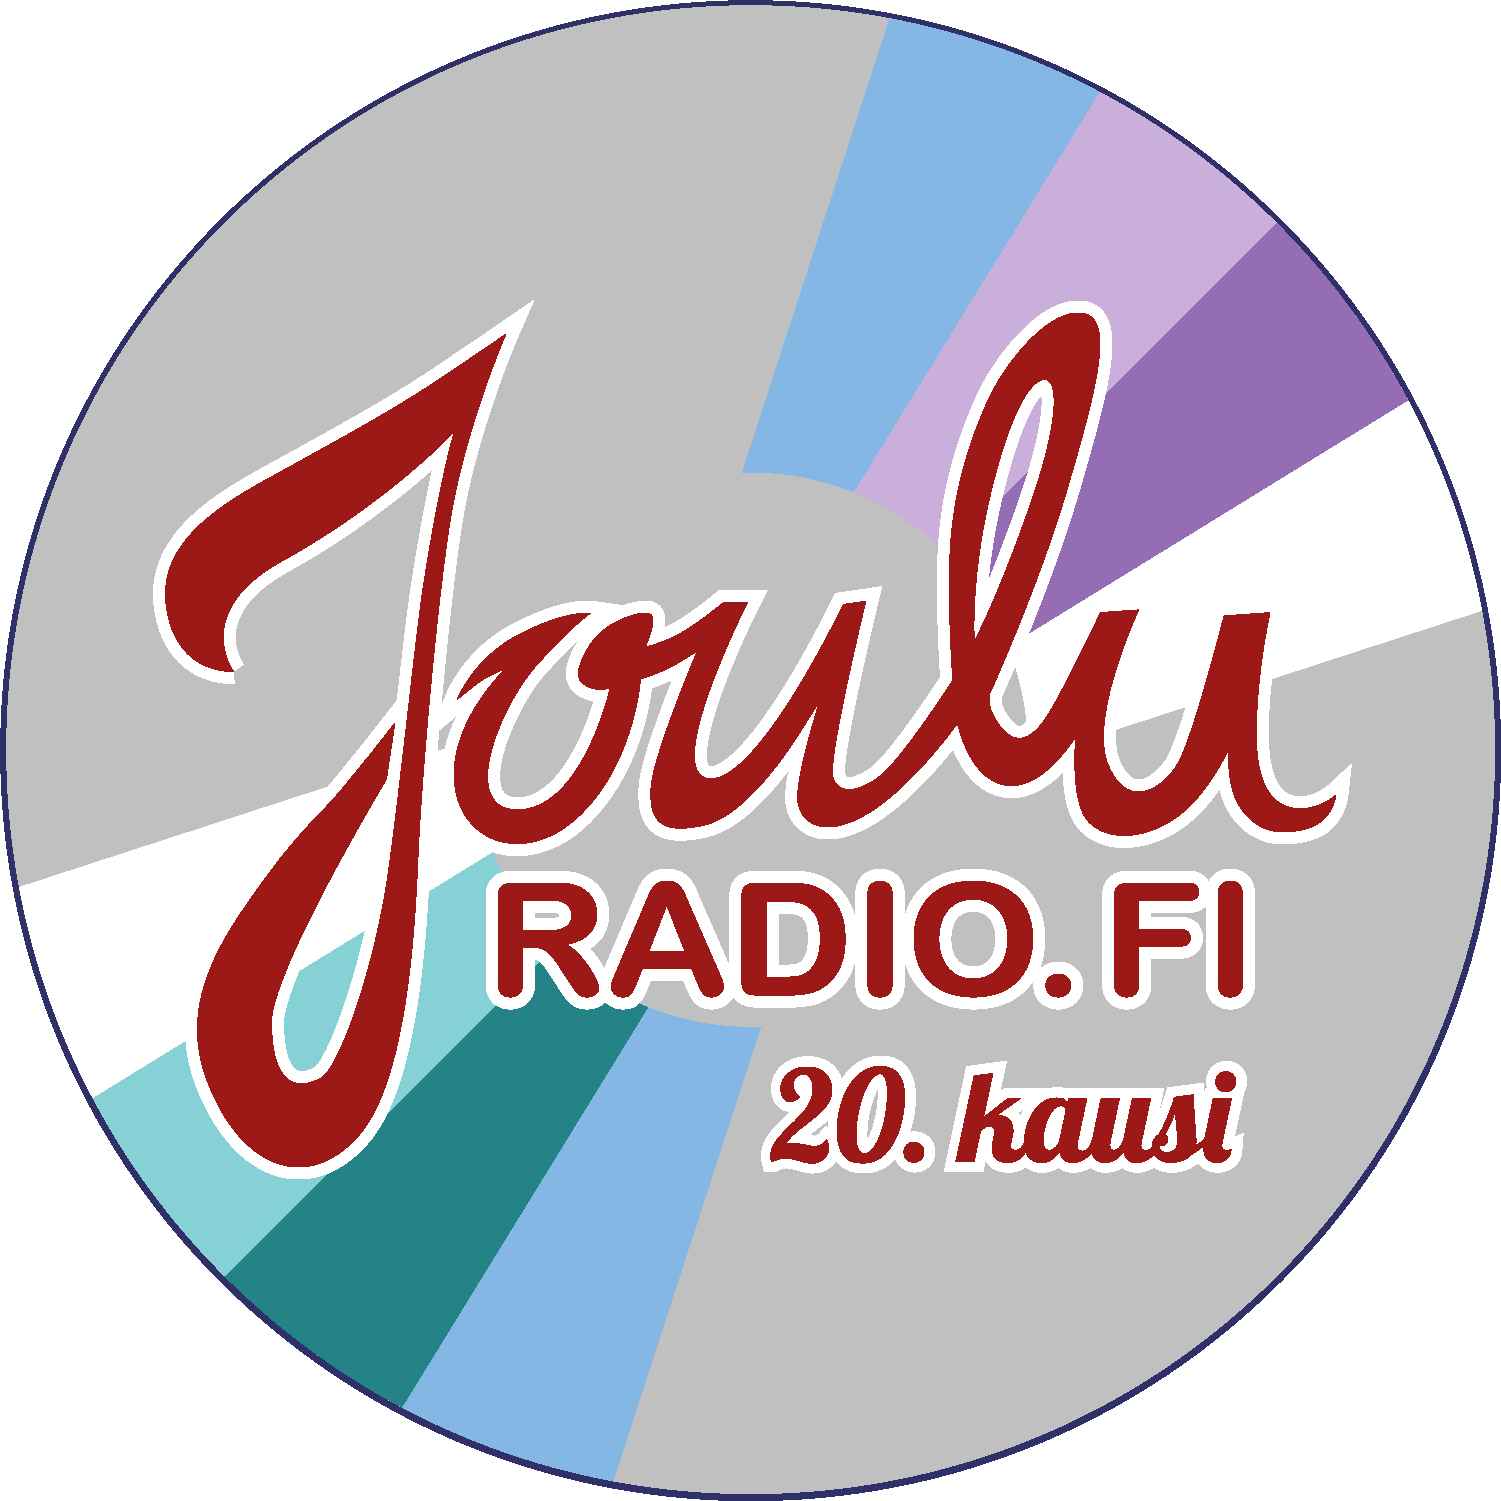 Jouluradio 20v logo_JPG.jpg